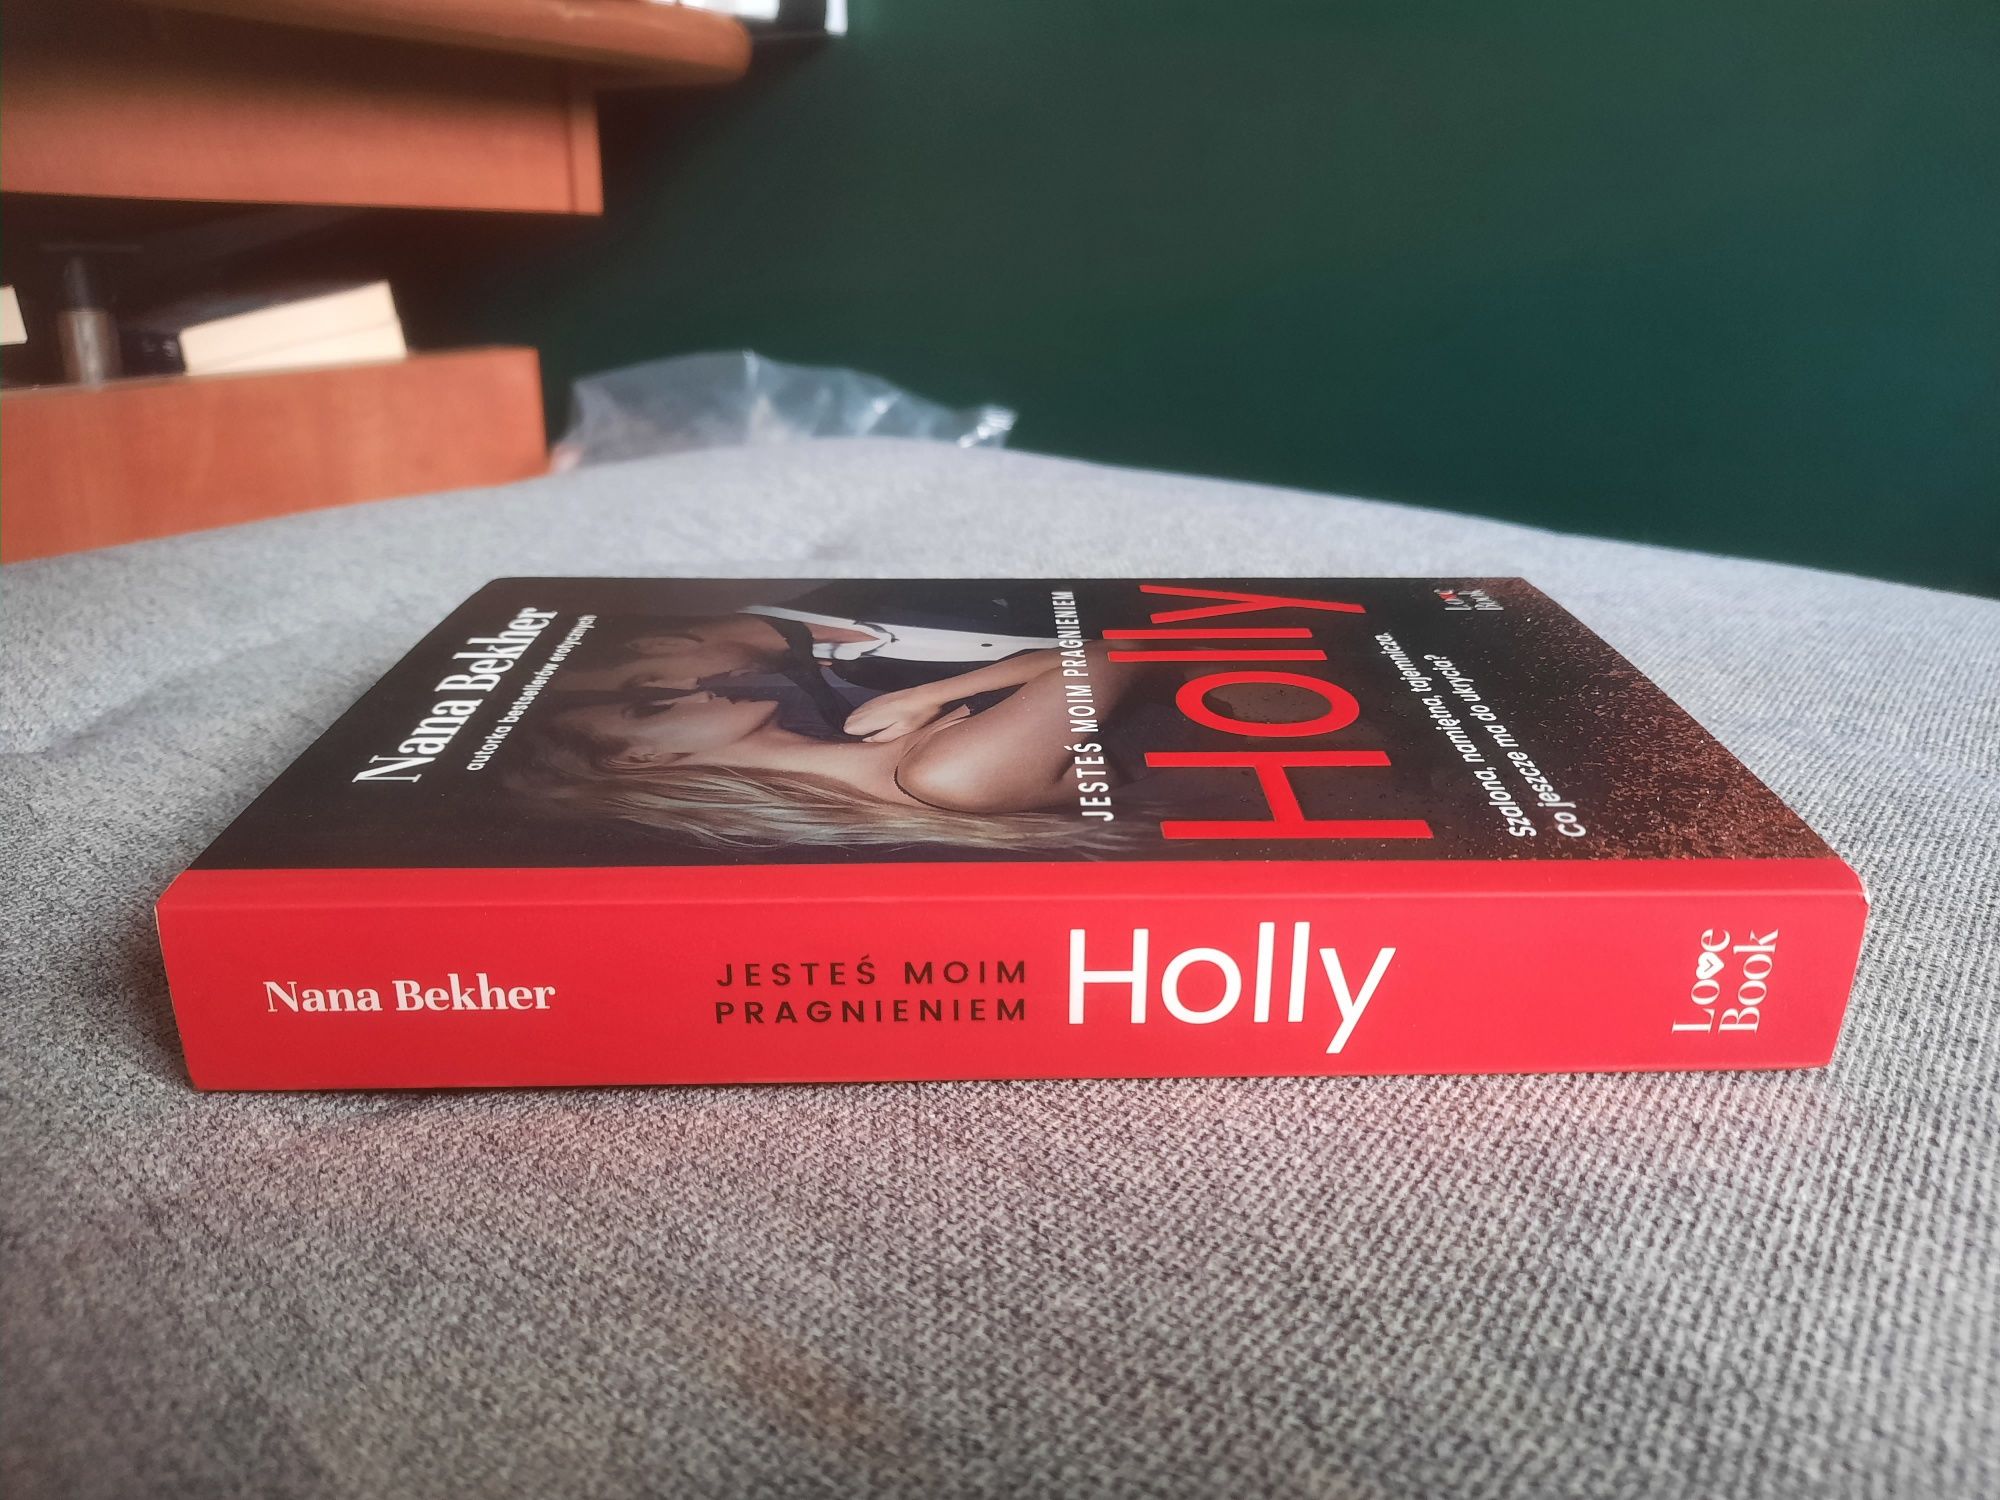 Książka "Jesteś moim pragnieniem Holly" Nana Bekher